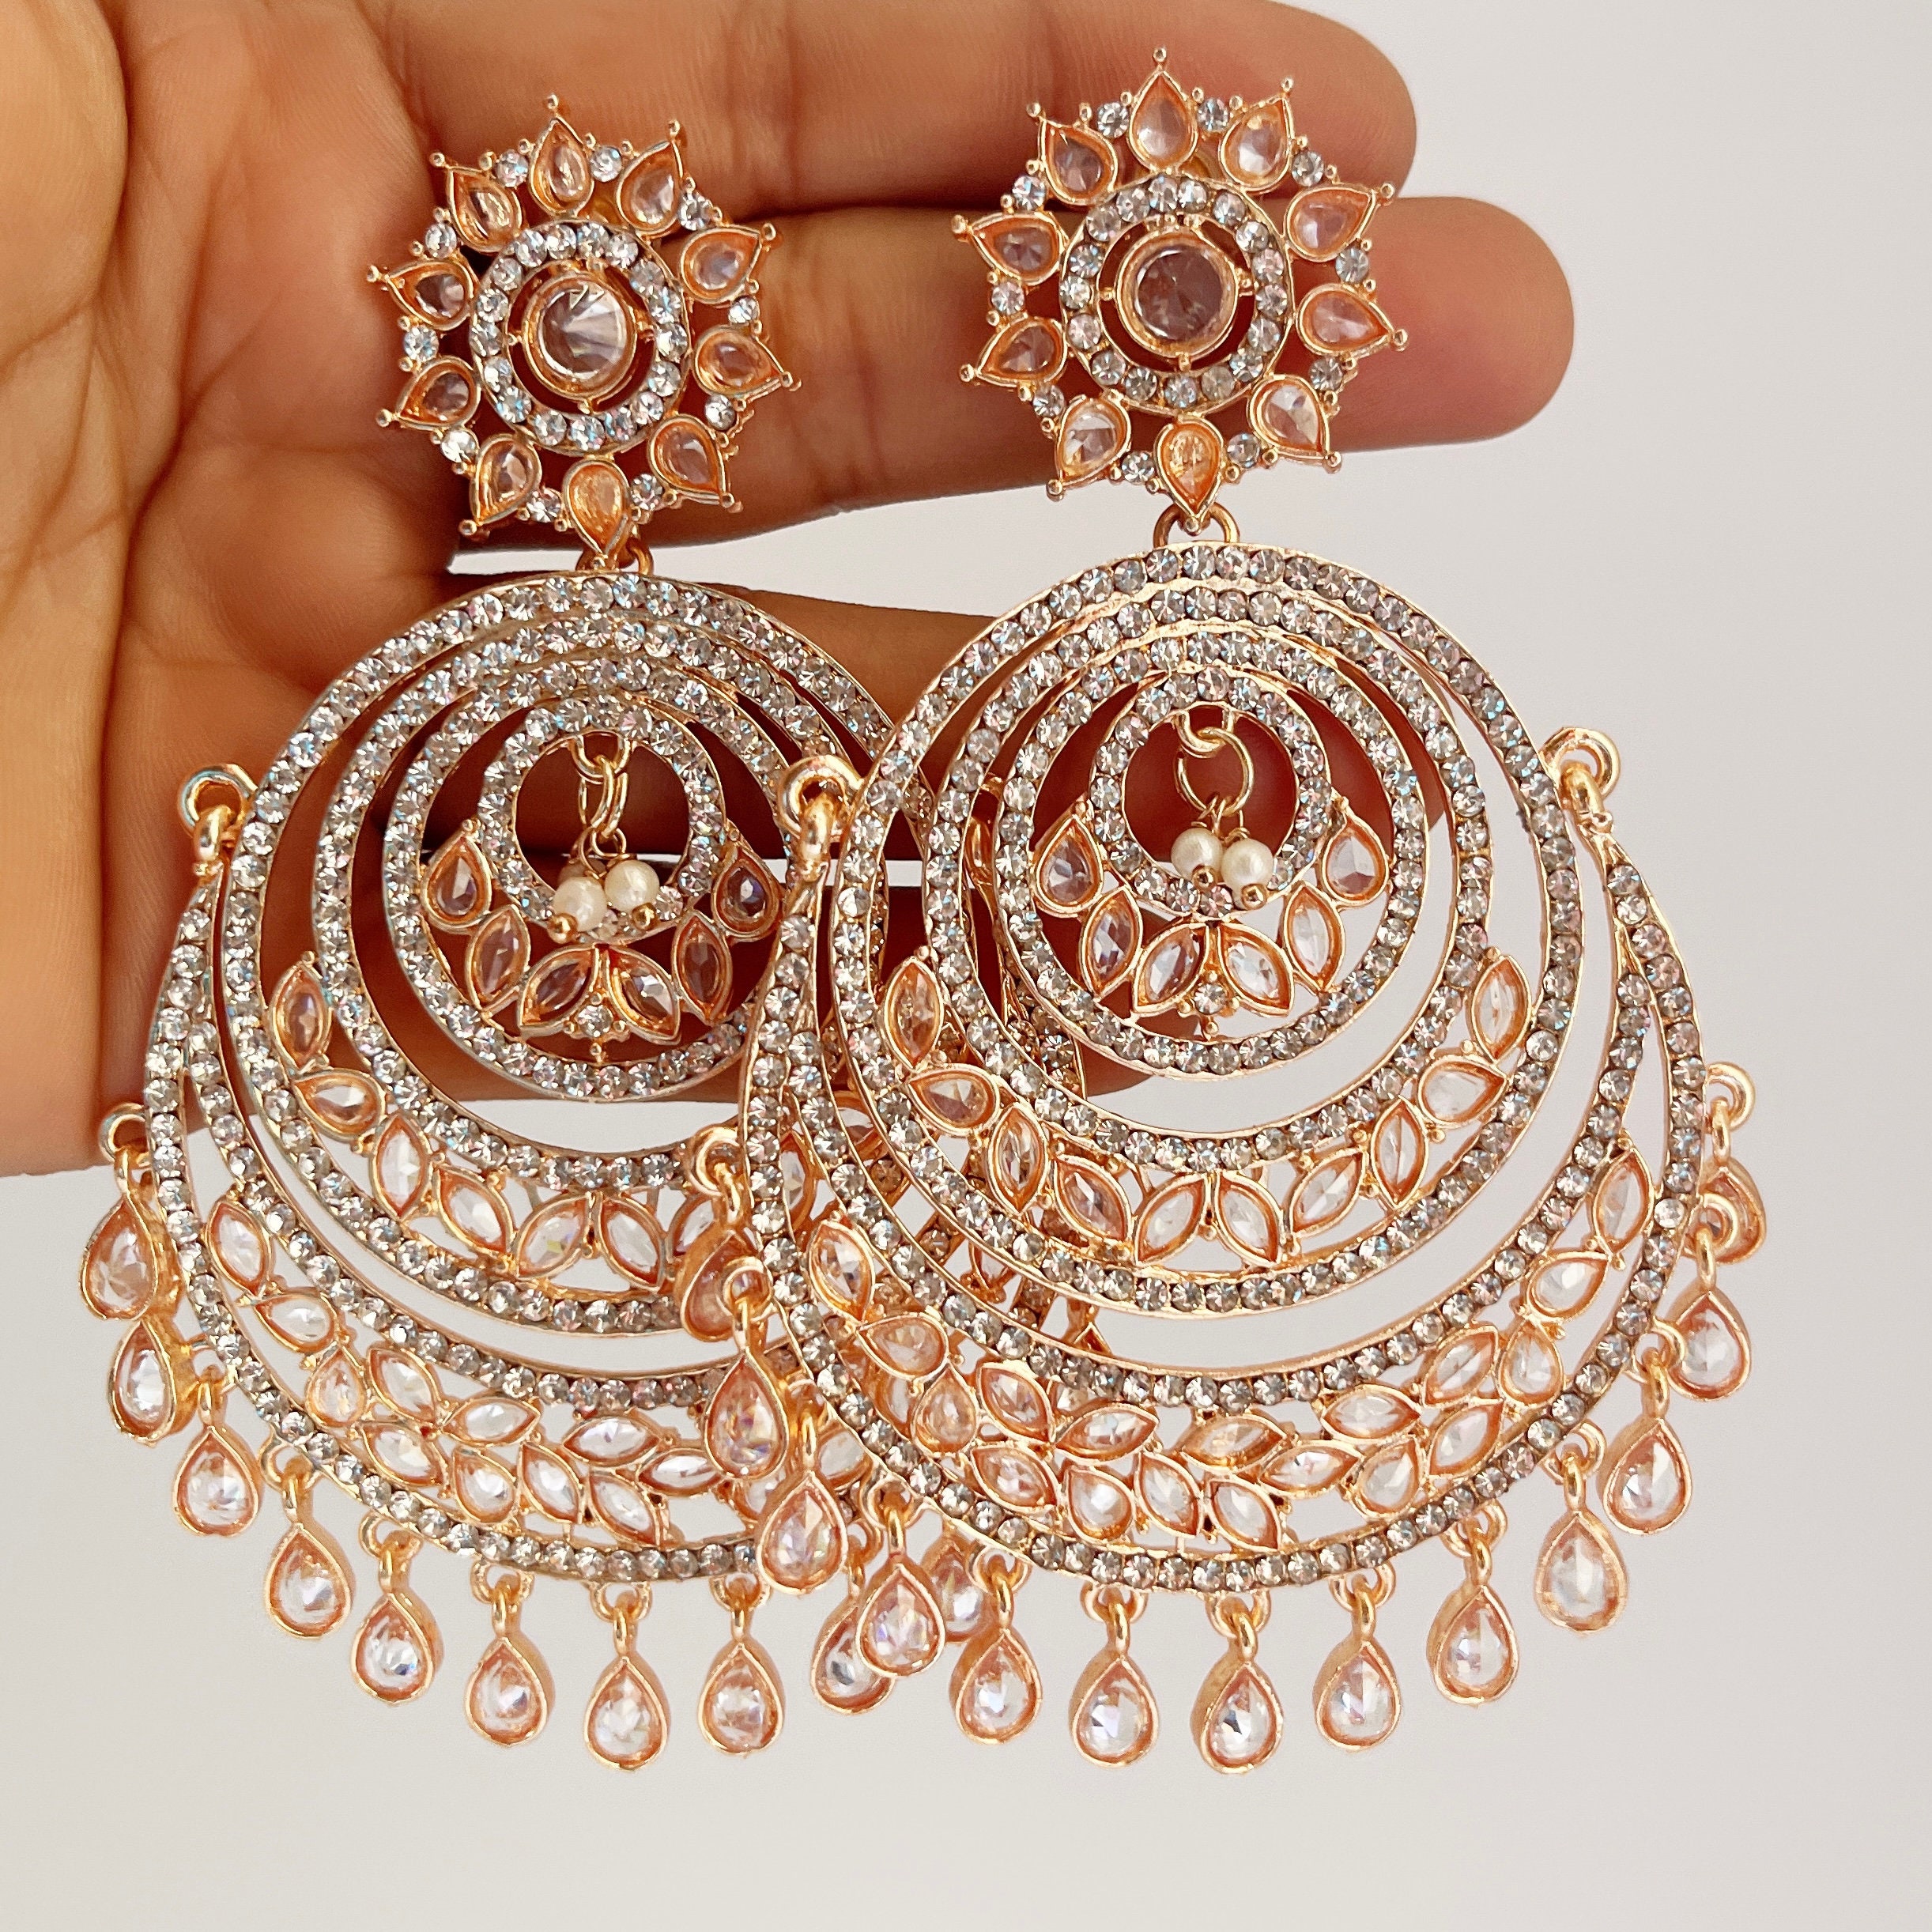 Kate Spade Pearl Gold Stud Earrings for Women Online India at Darveys.com